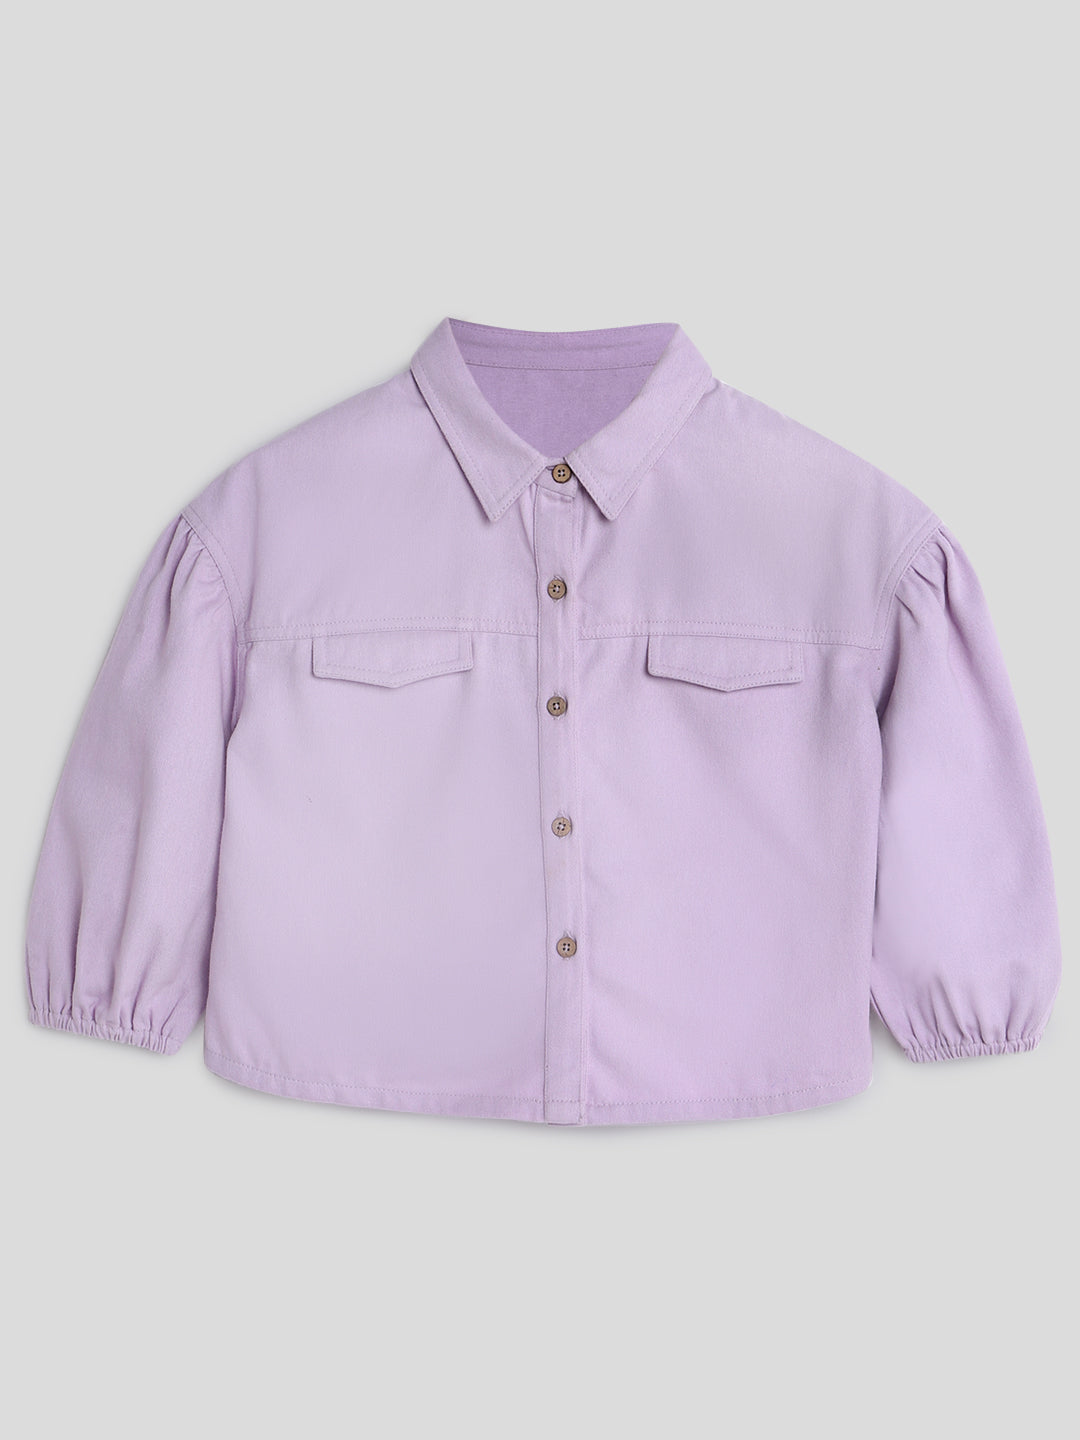 Lilac Drop Shoulder Shirt Somersault